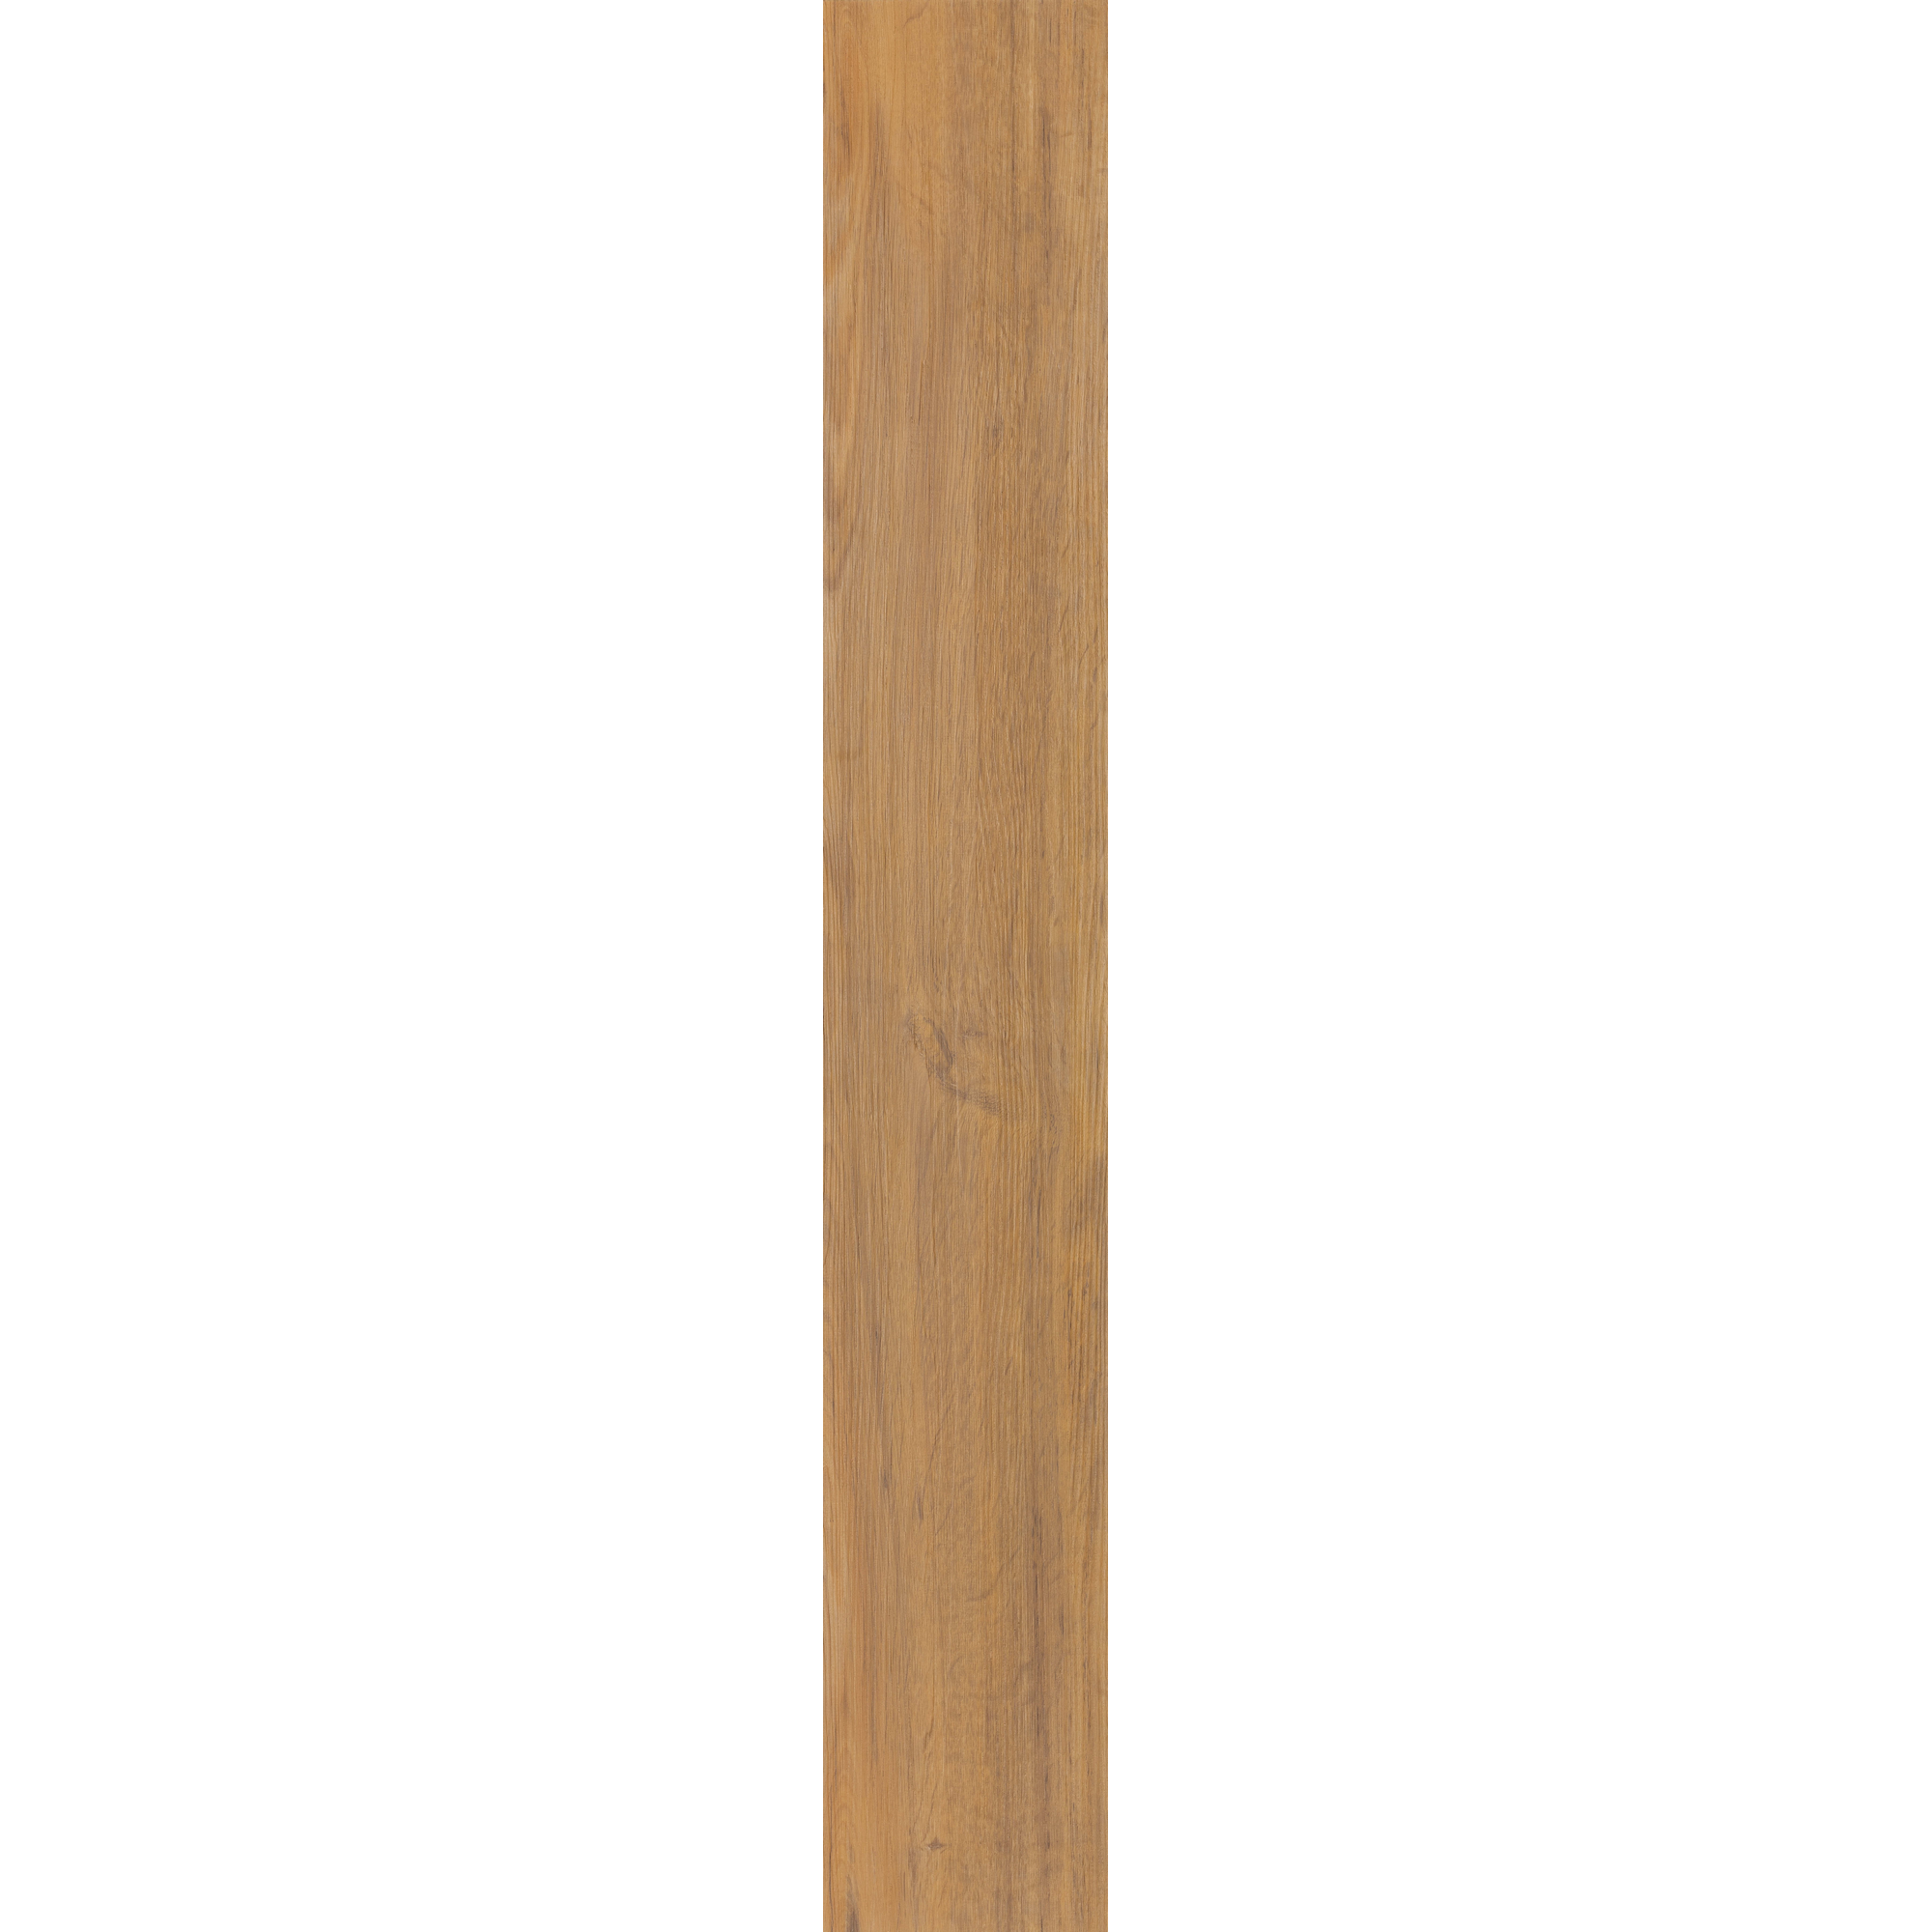 Vinylboden 'Rigid' Golden Oak braun 4 mm + product picture